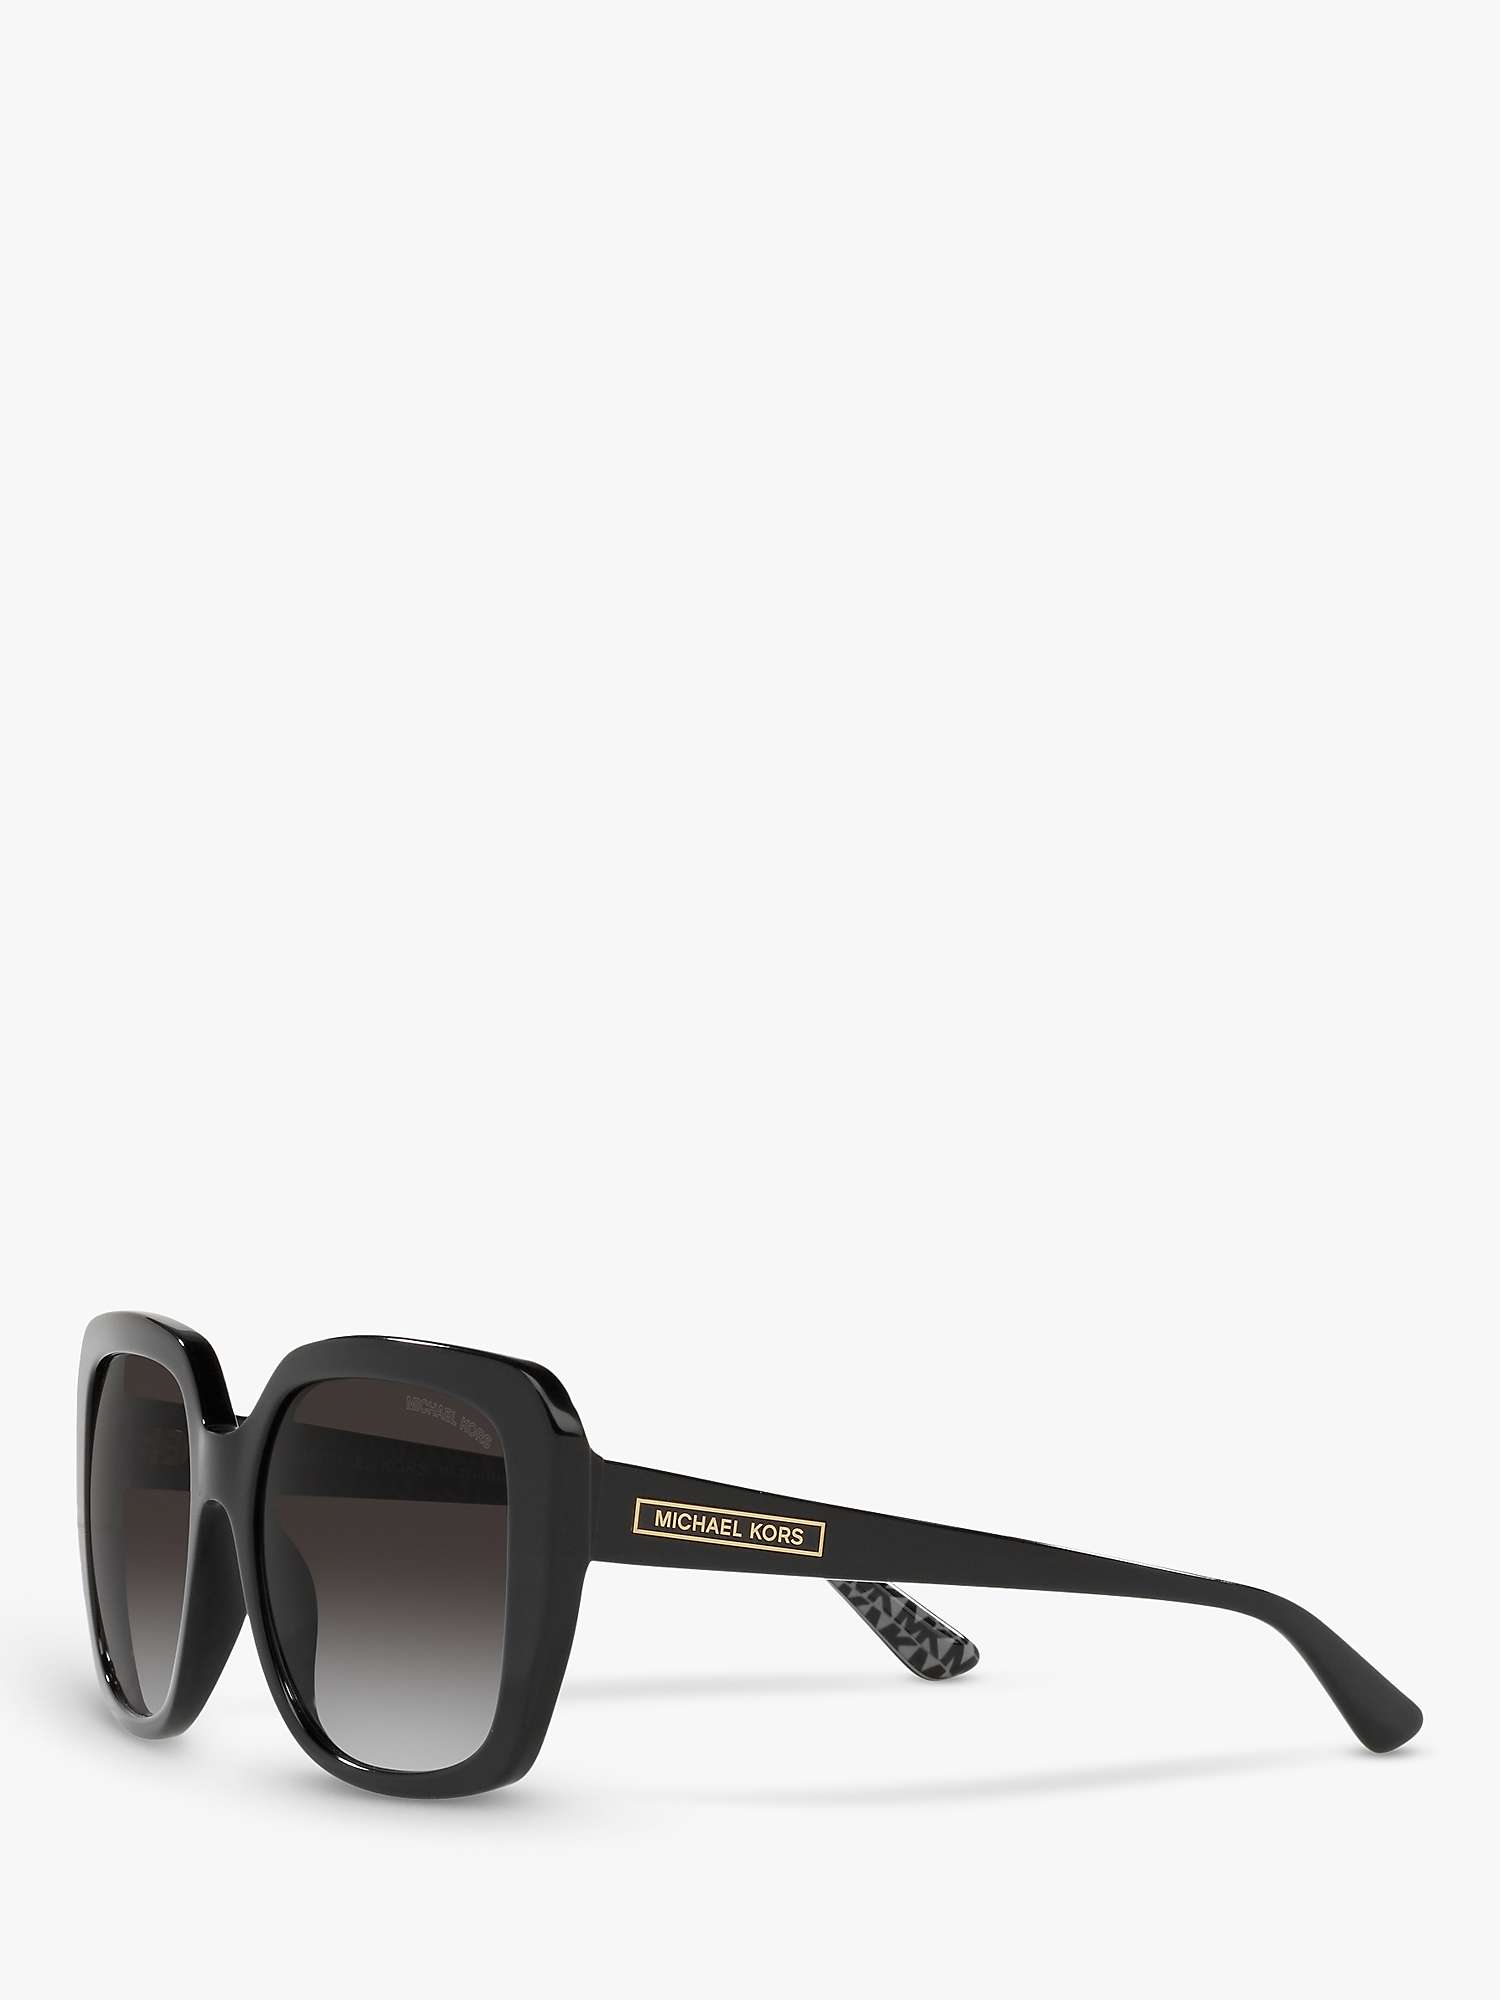 Buy Michael Kors MK2140 Women's Manhasset Square Sunglasses Online at johnlewis.com